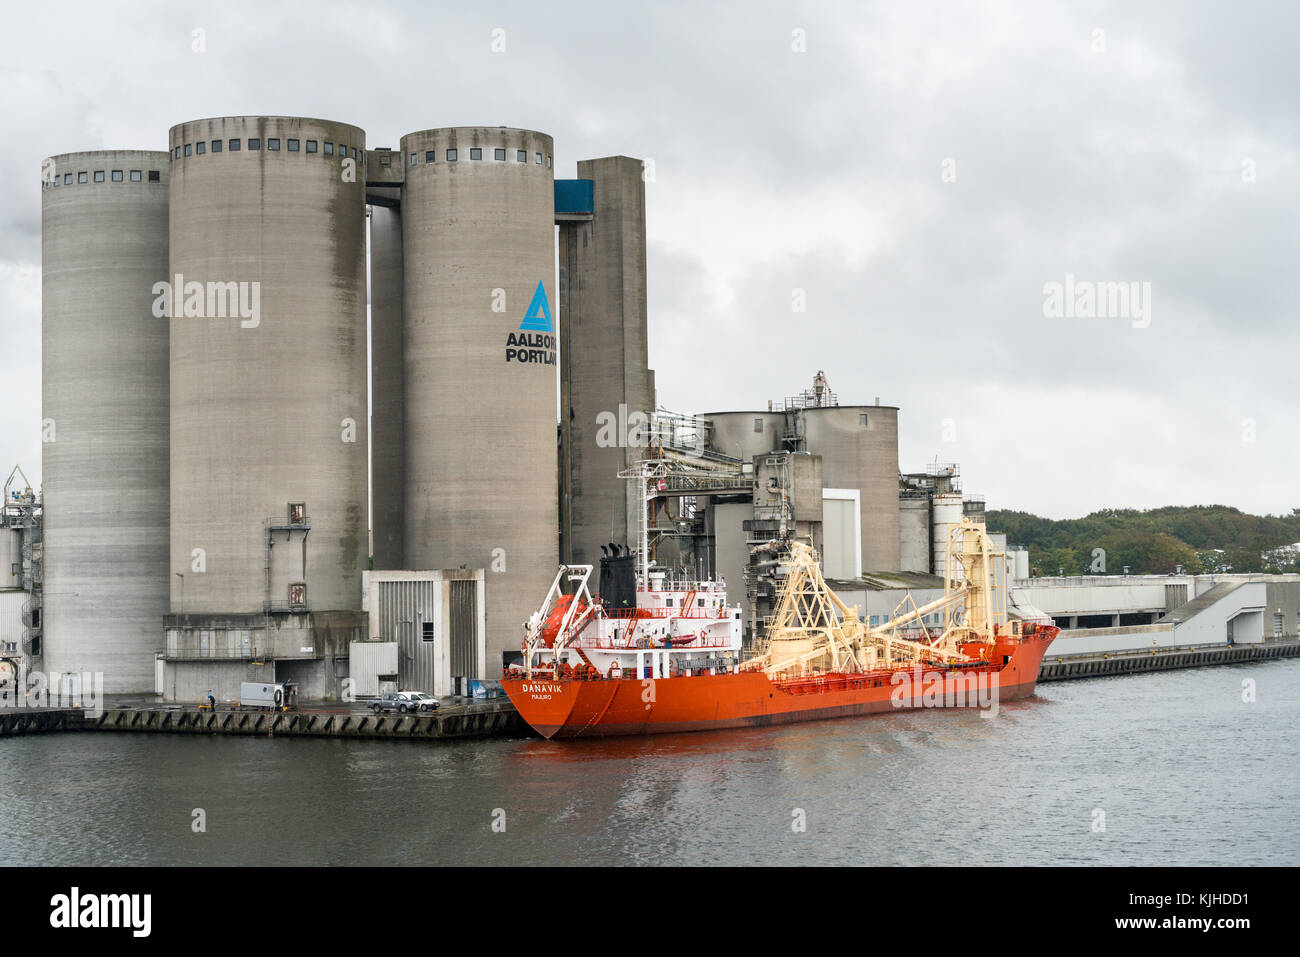 Danavik cement carrier ship in Aalborg, Denmark Stock Photo